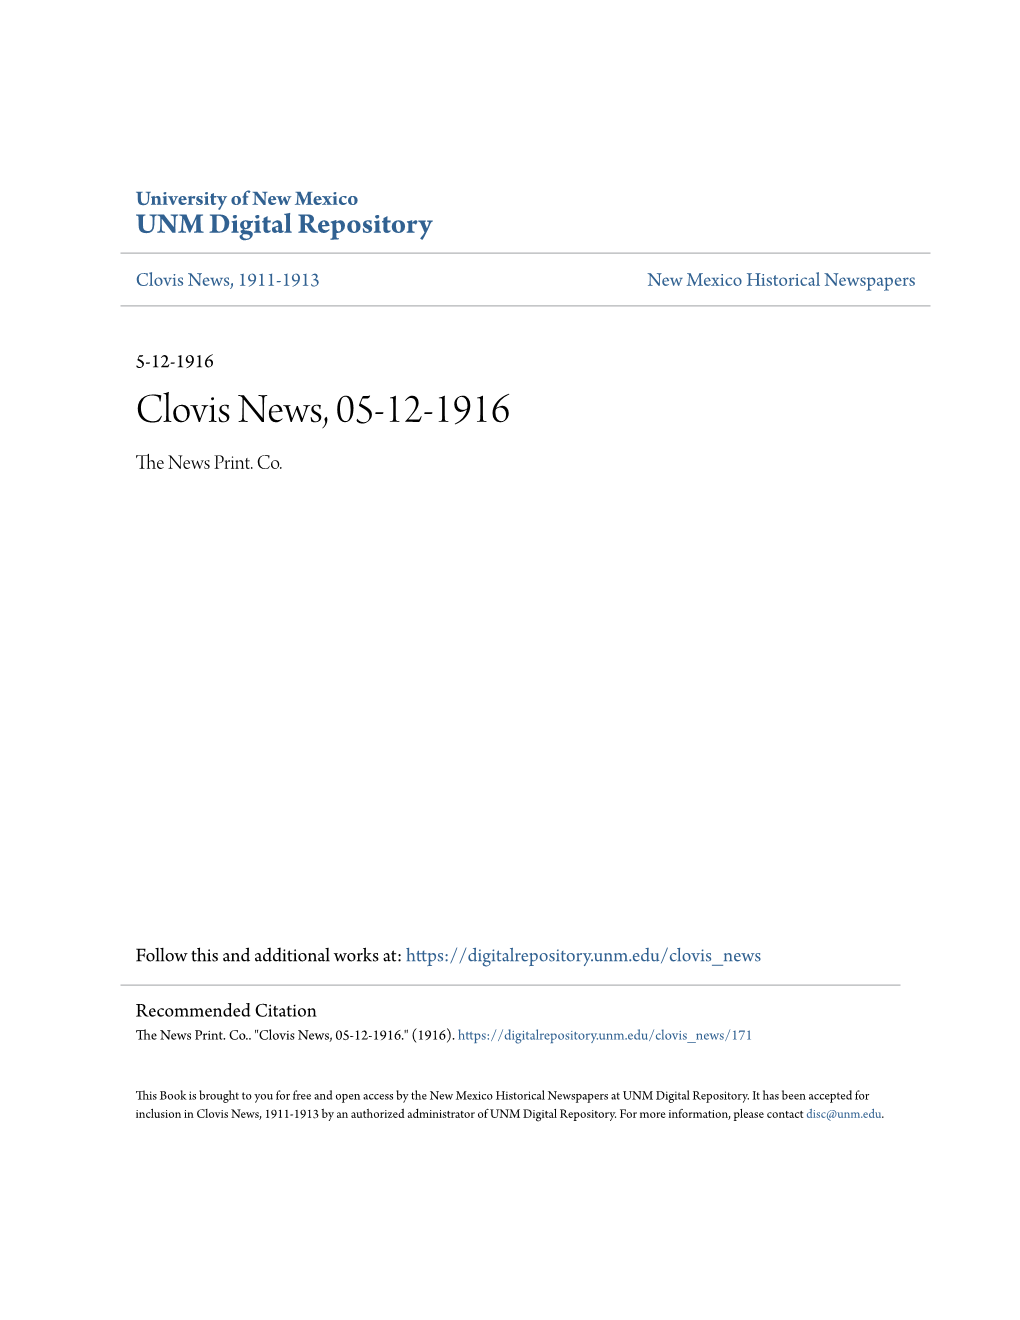 Clovis News, 05-12-1916 the Ewn S Print